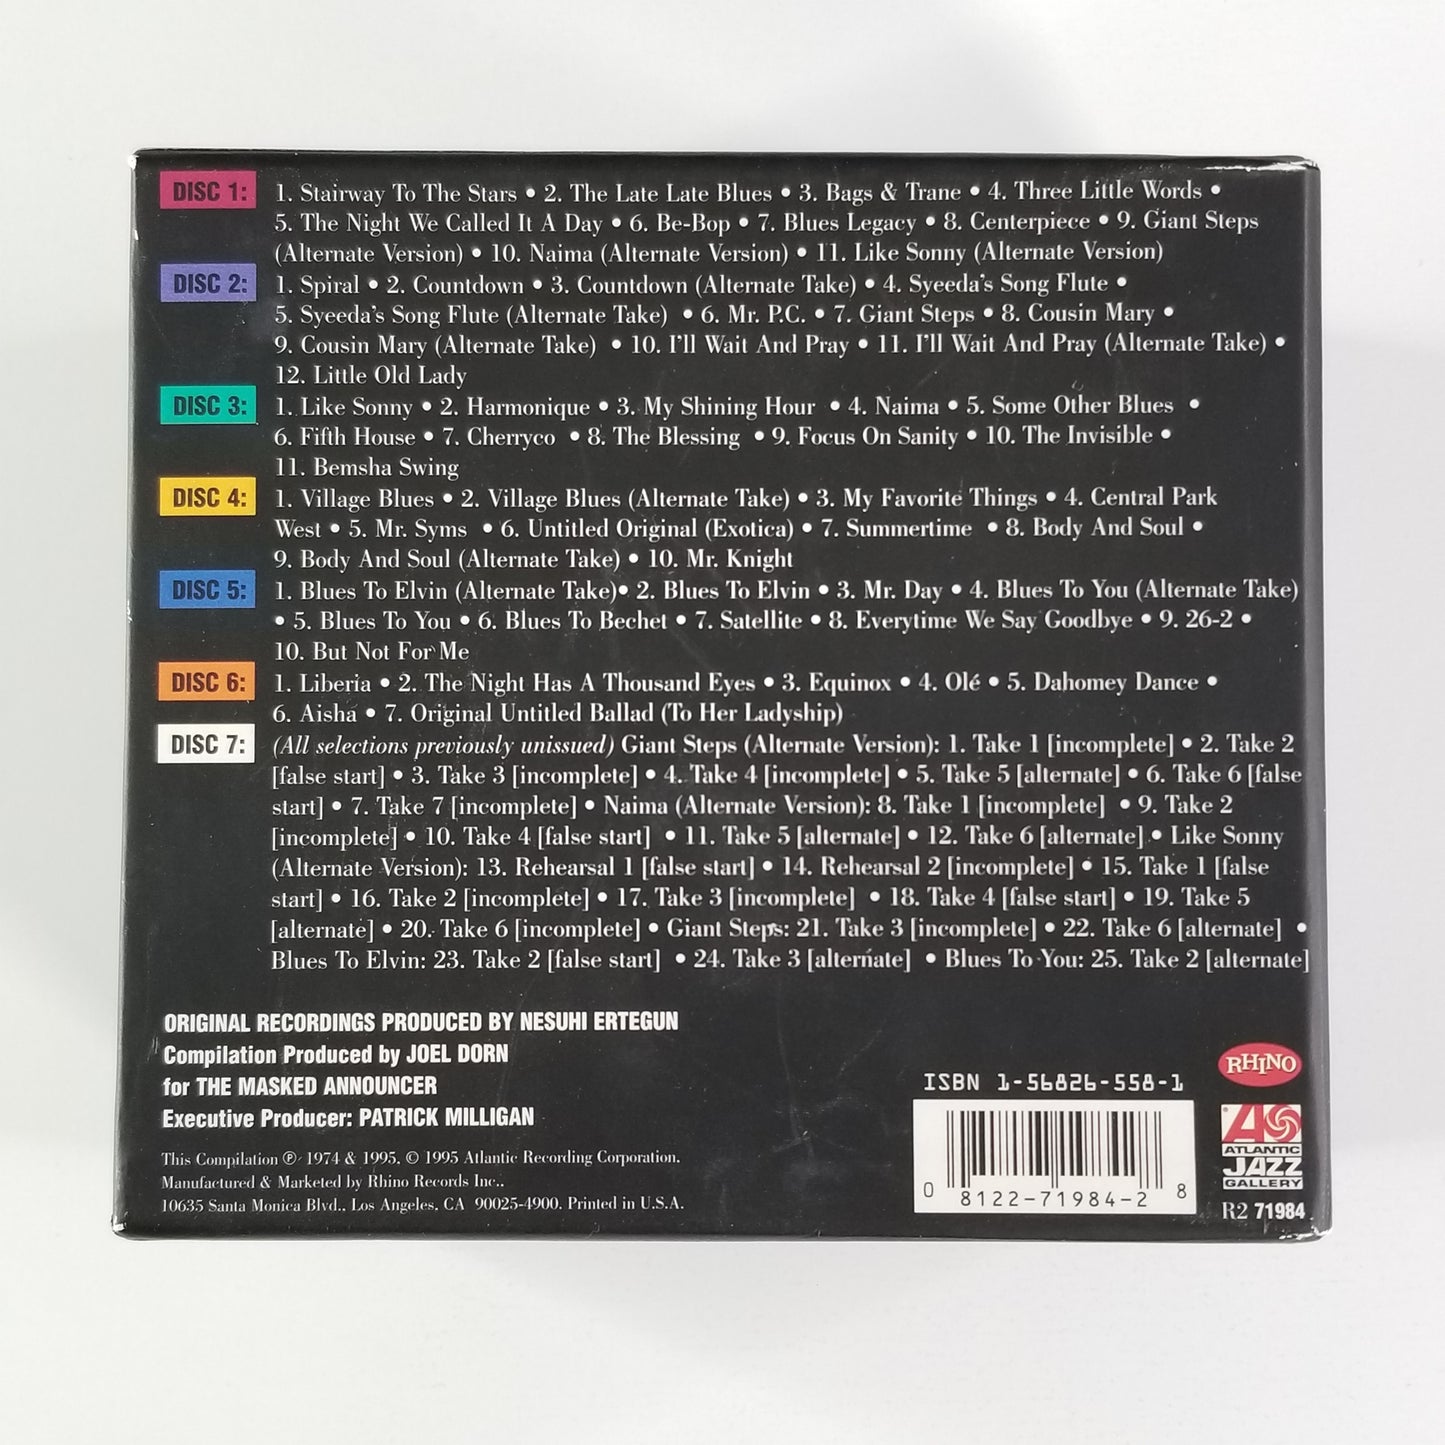 John Coltrane - The Heavyweight Champion The Complete Atlantic Recordings (1995, 7x CD Box Set) R2 71984